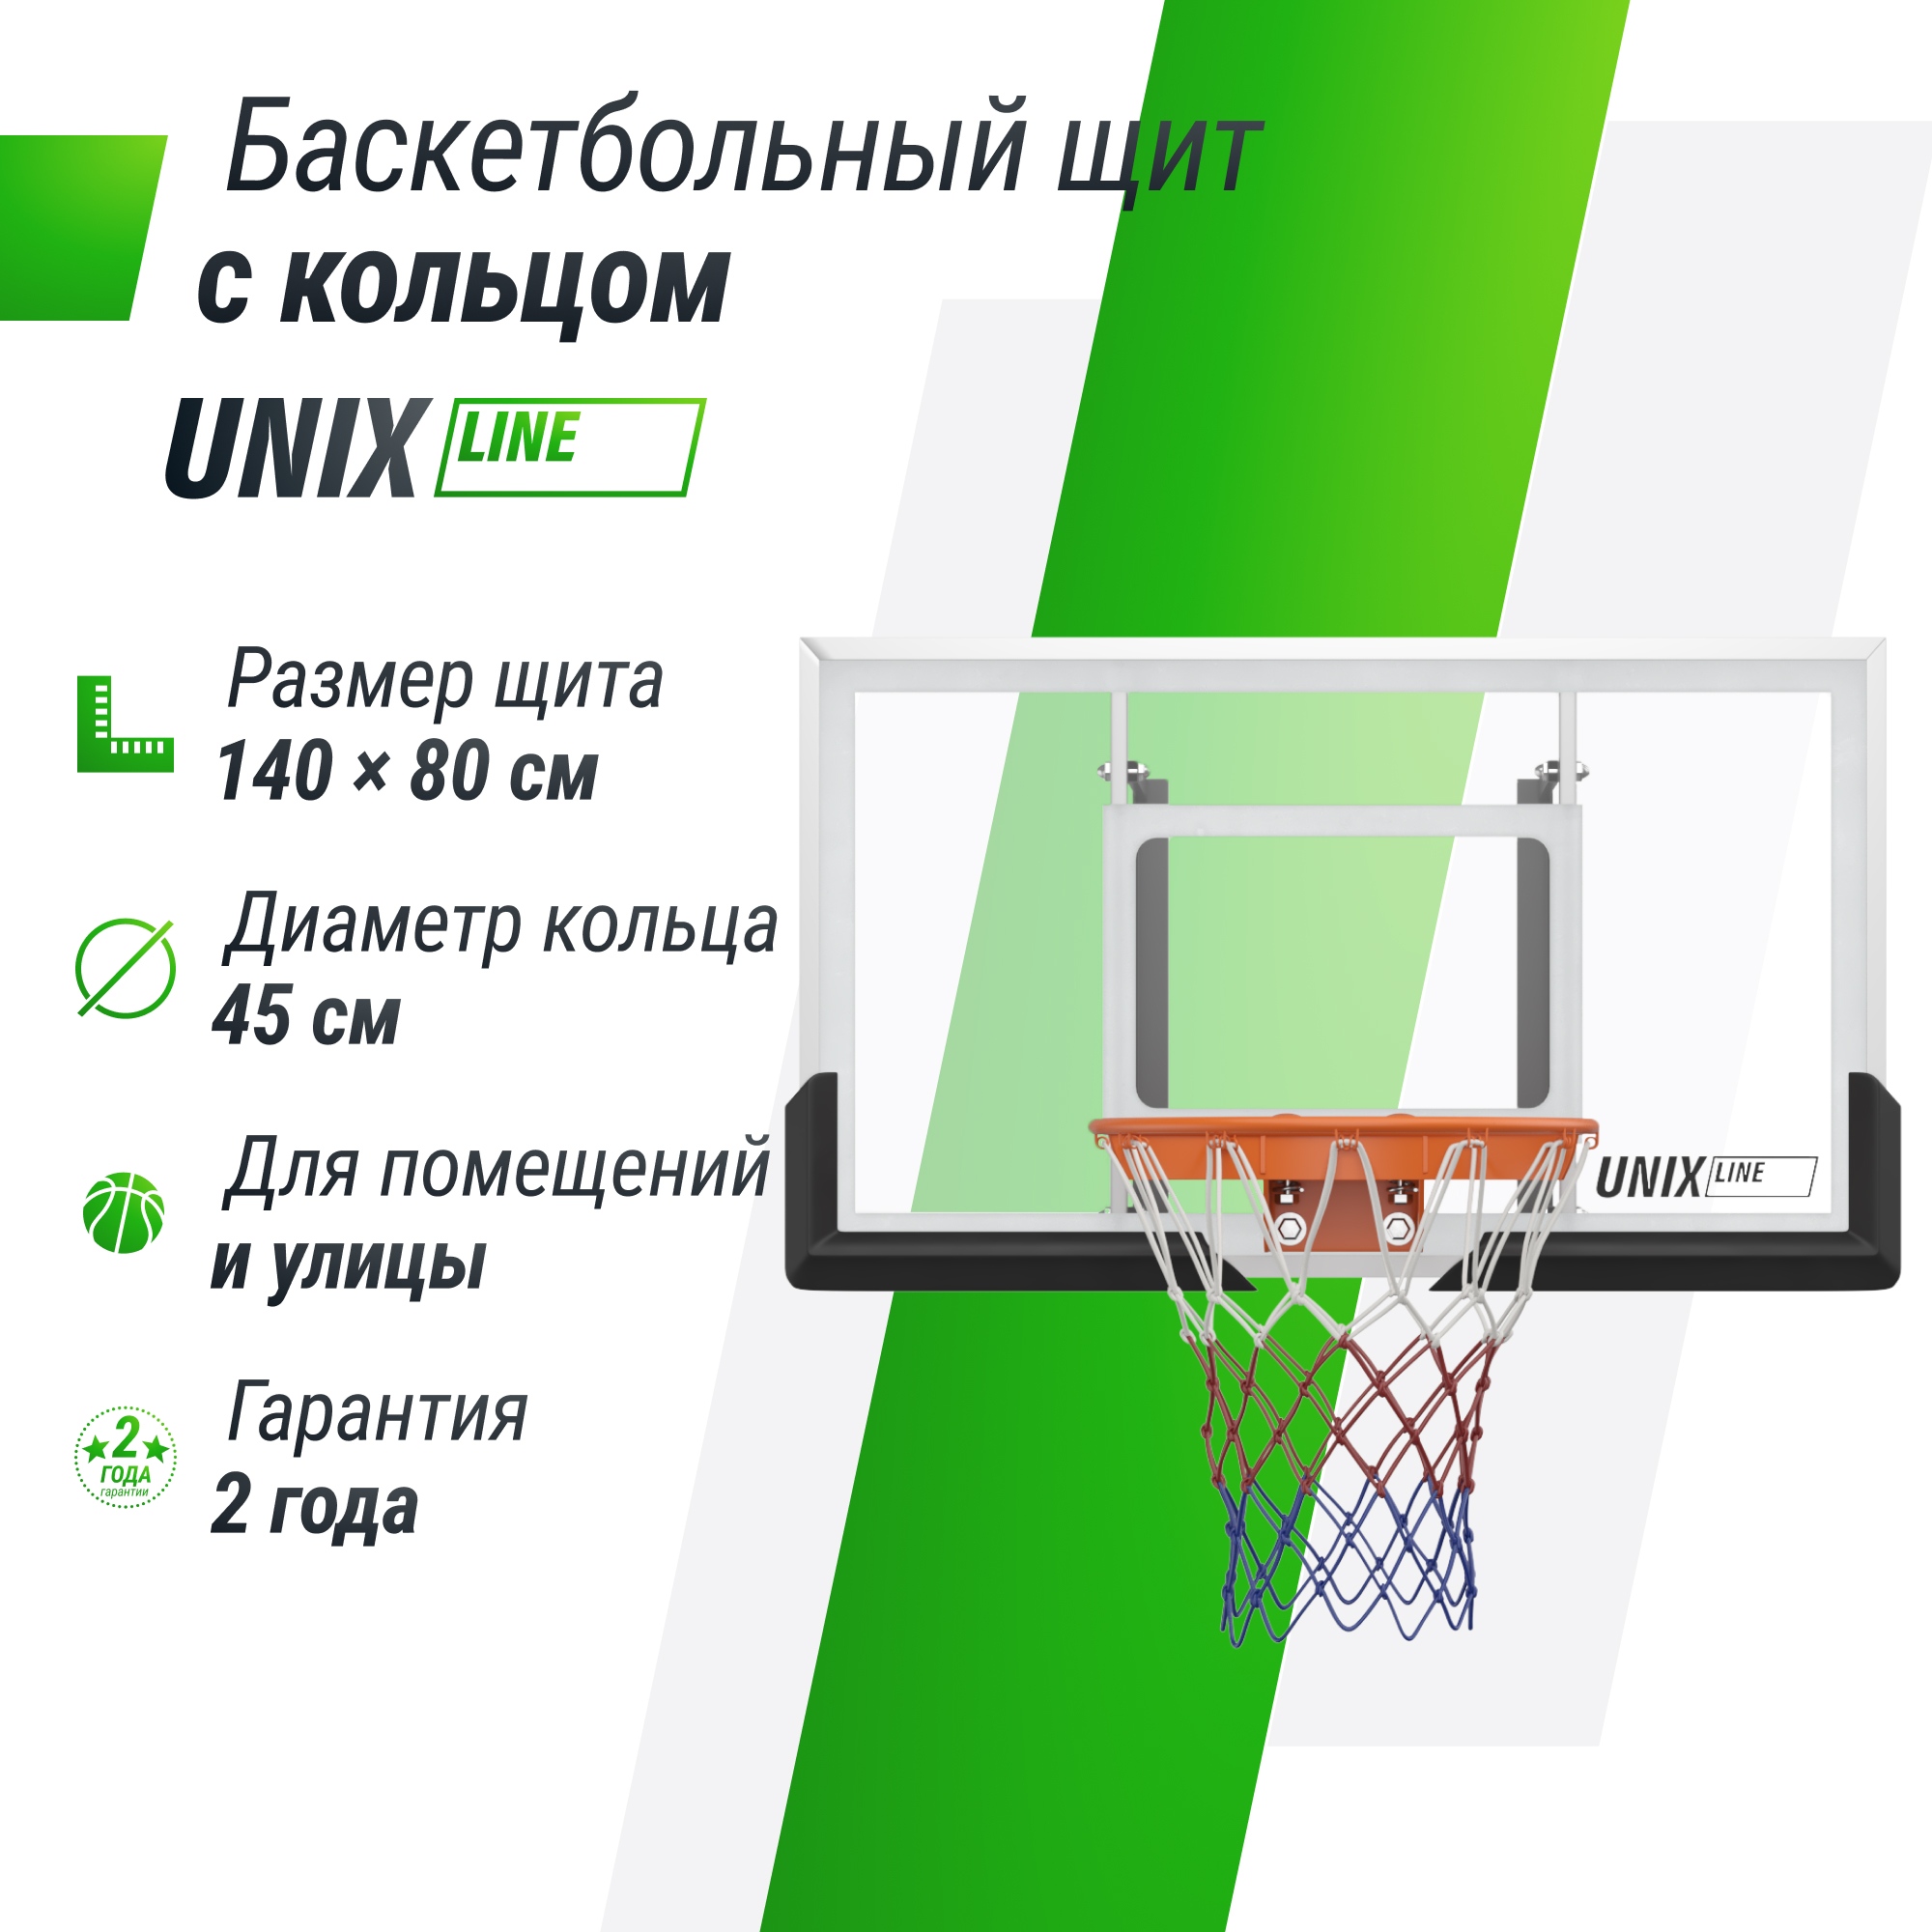 Баскетбольный щит 50"x32" R45 Unix Line B-Backboard-PC BSBS50PCBK 2000_2000